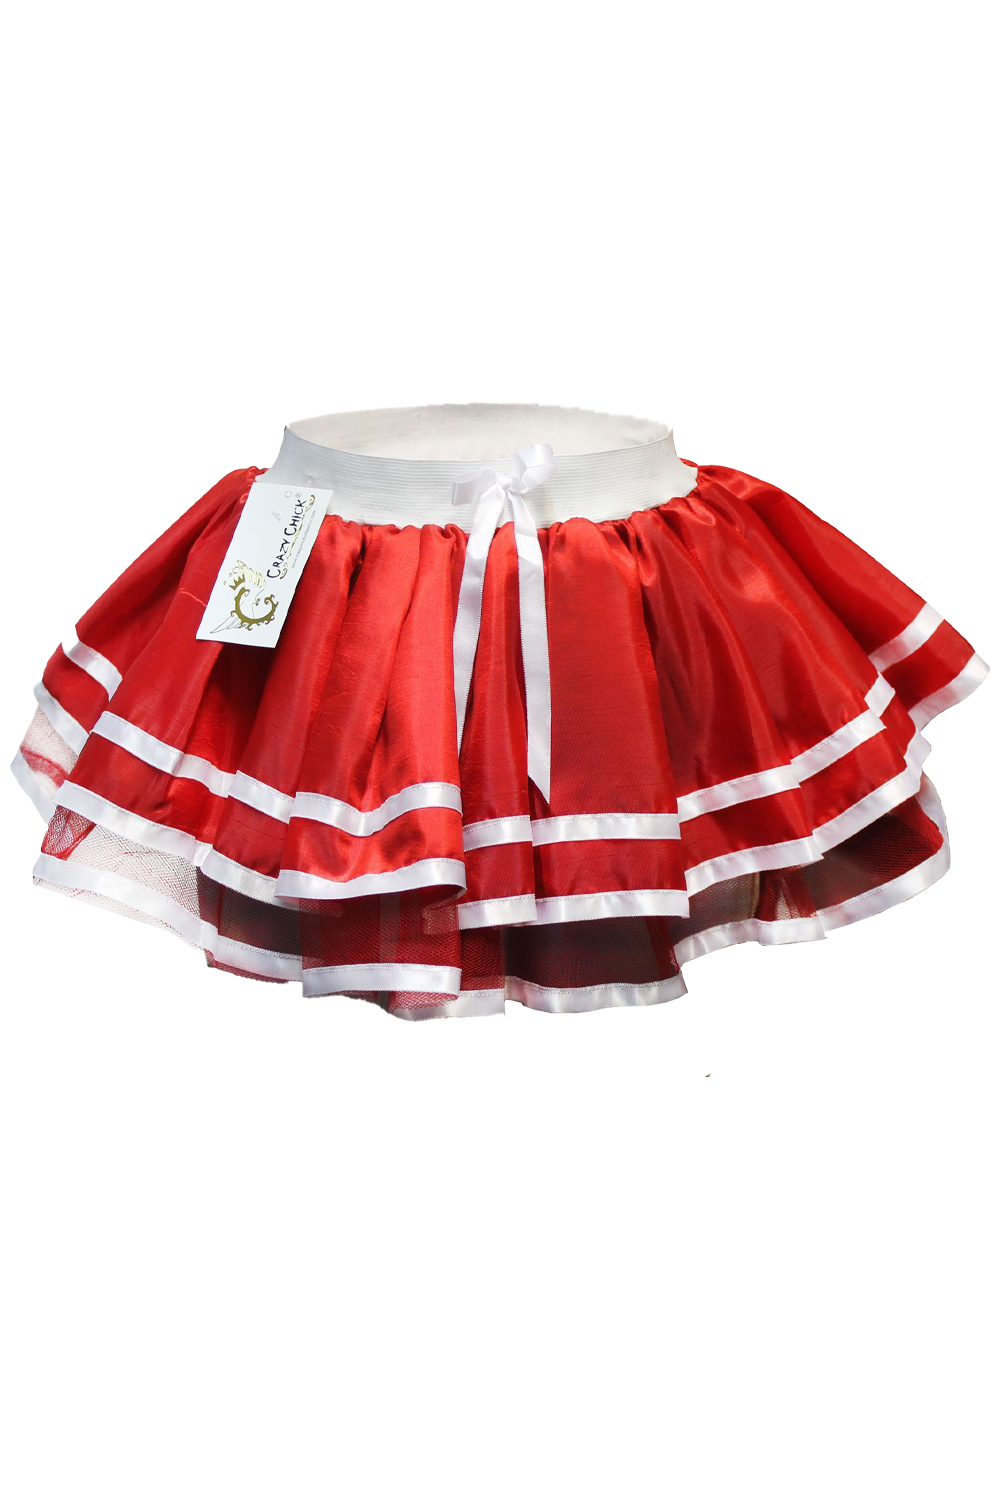 Crazy Chick Adult 2 Stripe Red Satin Skirt